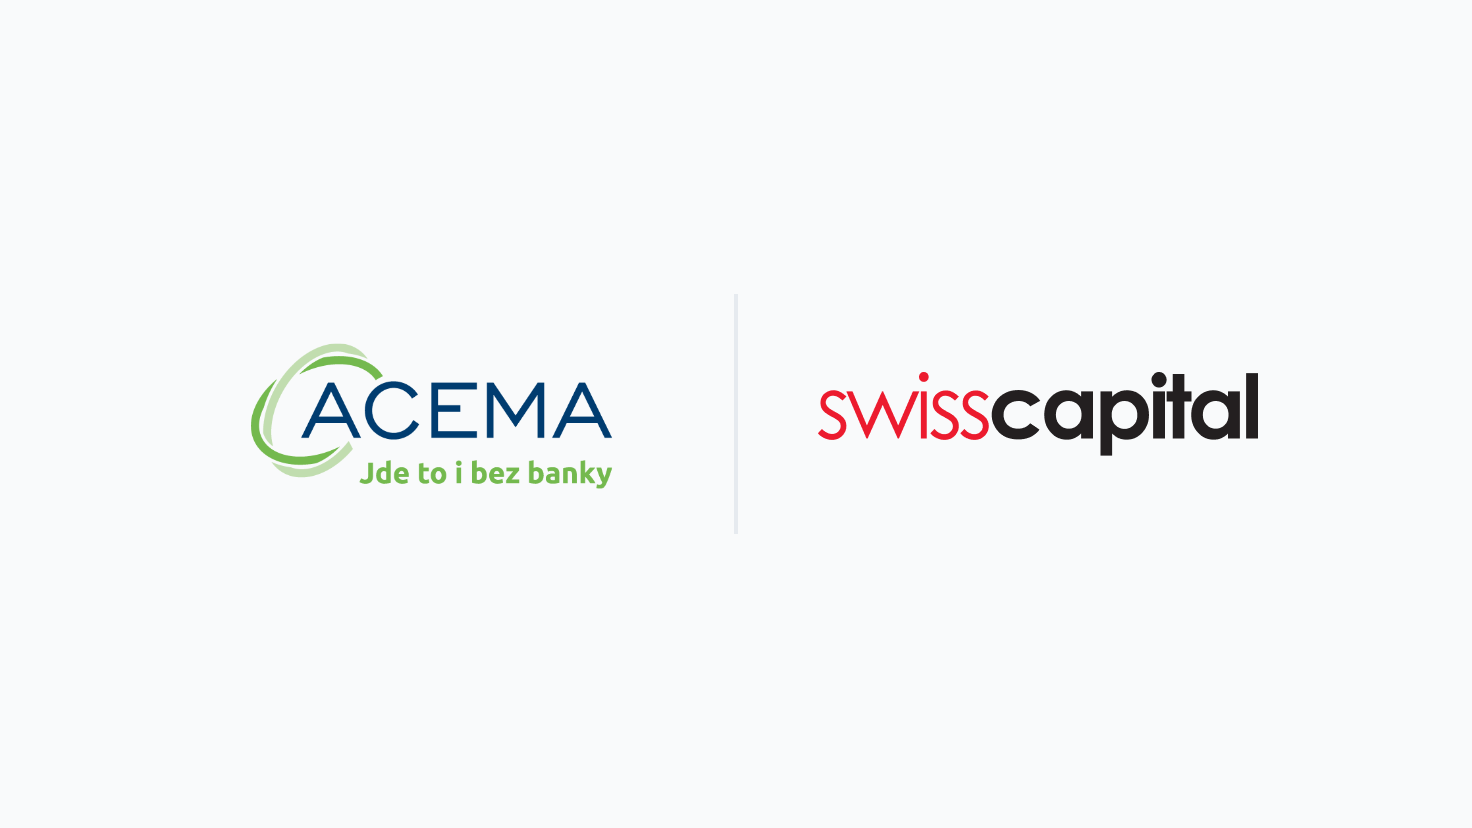 Acema and Swiss Capital